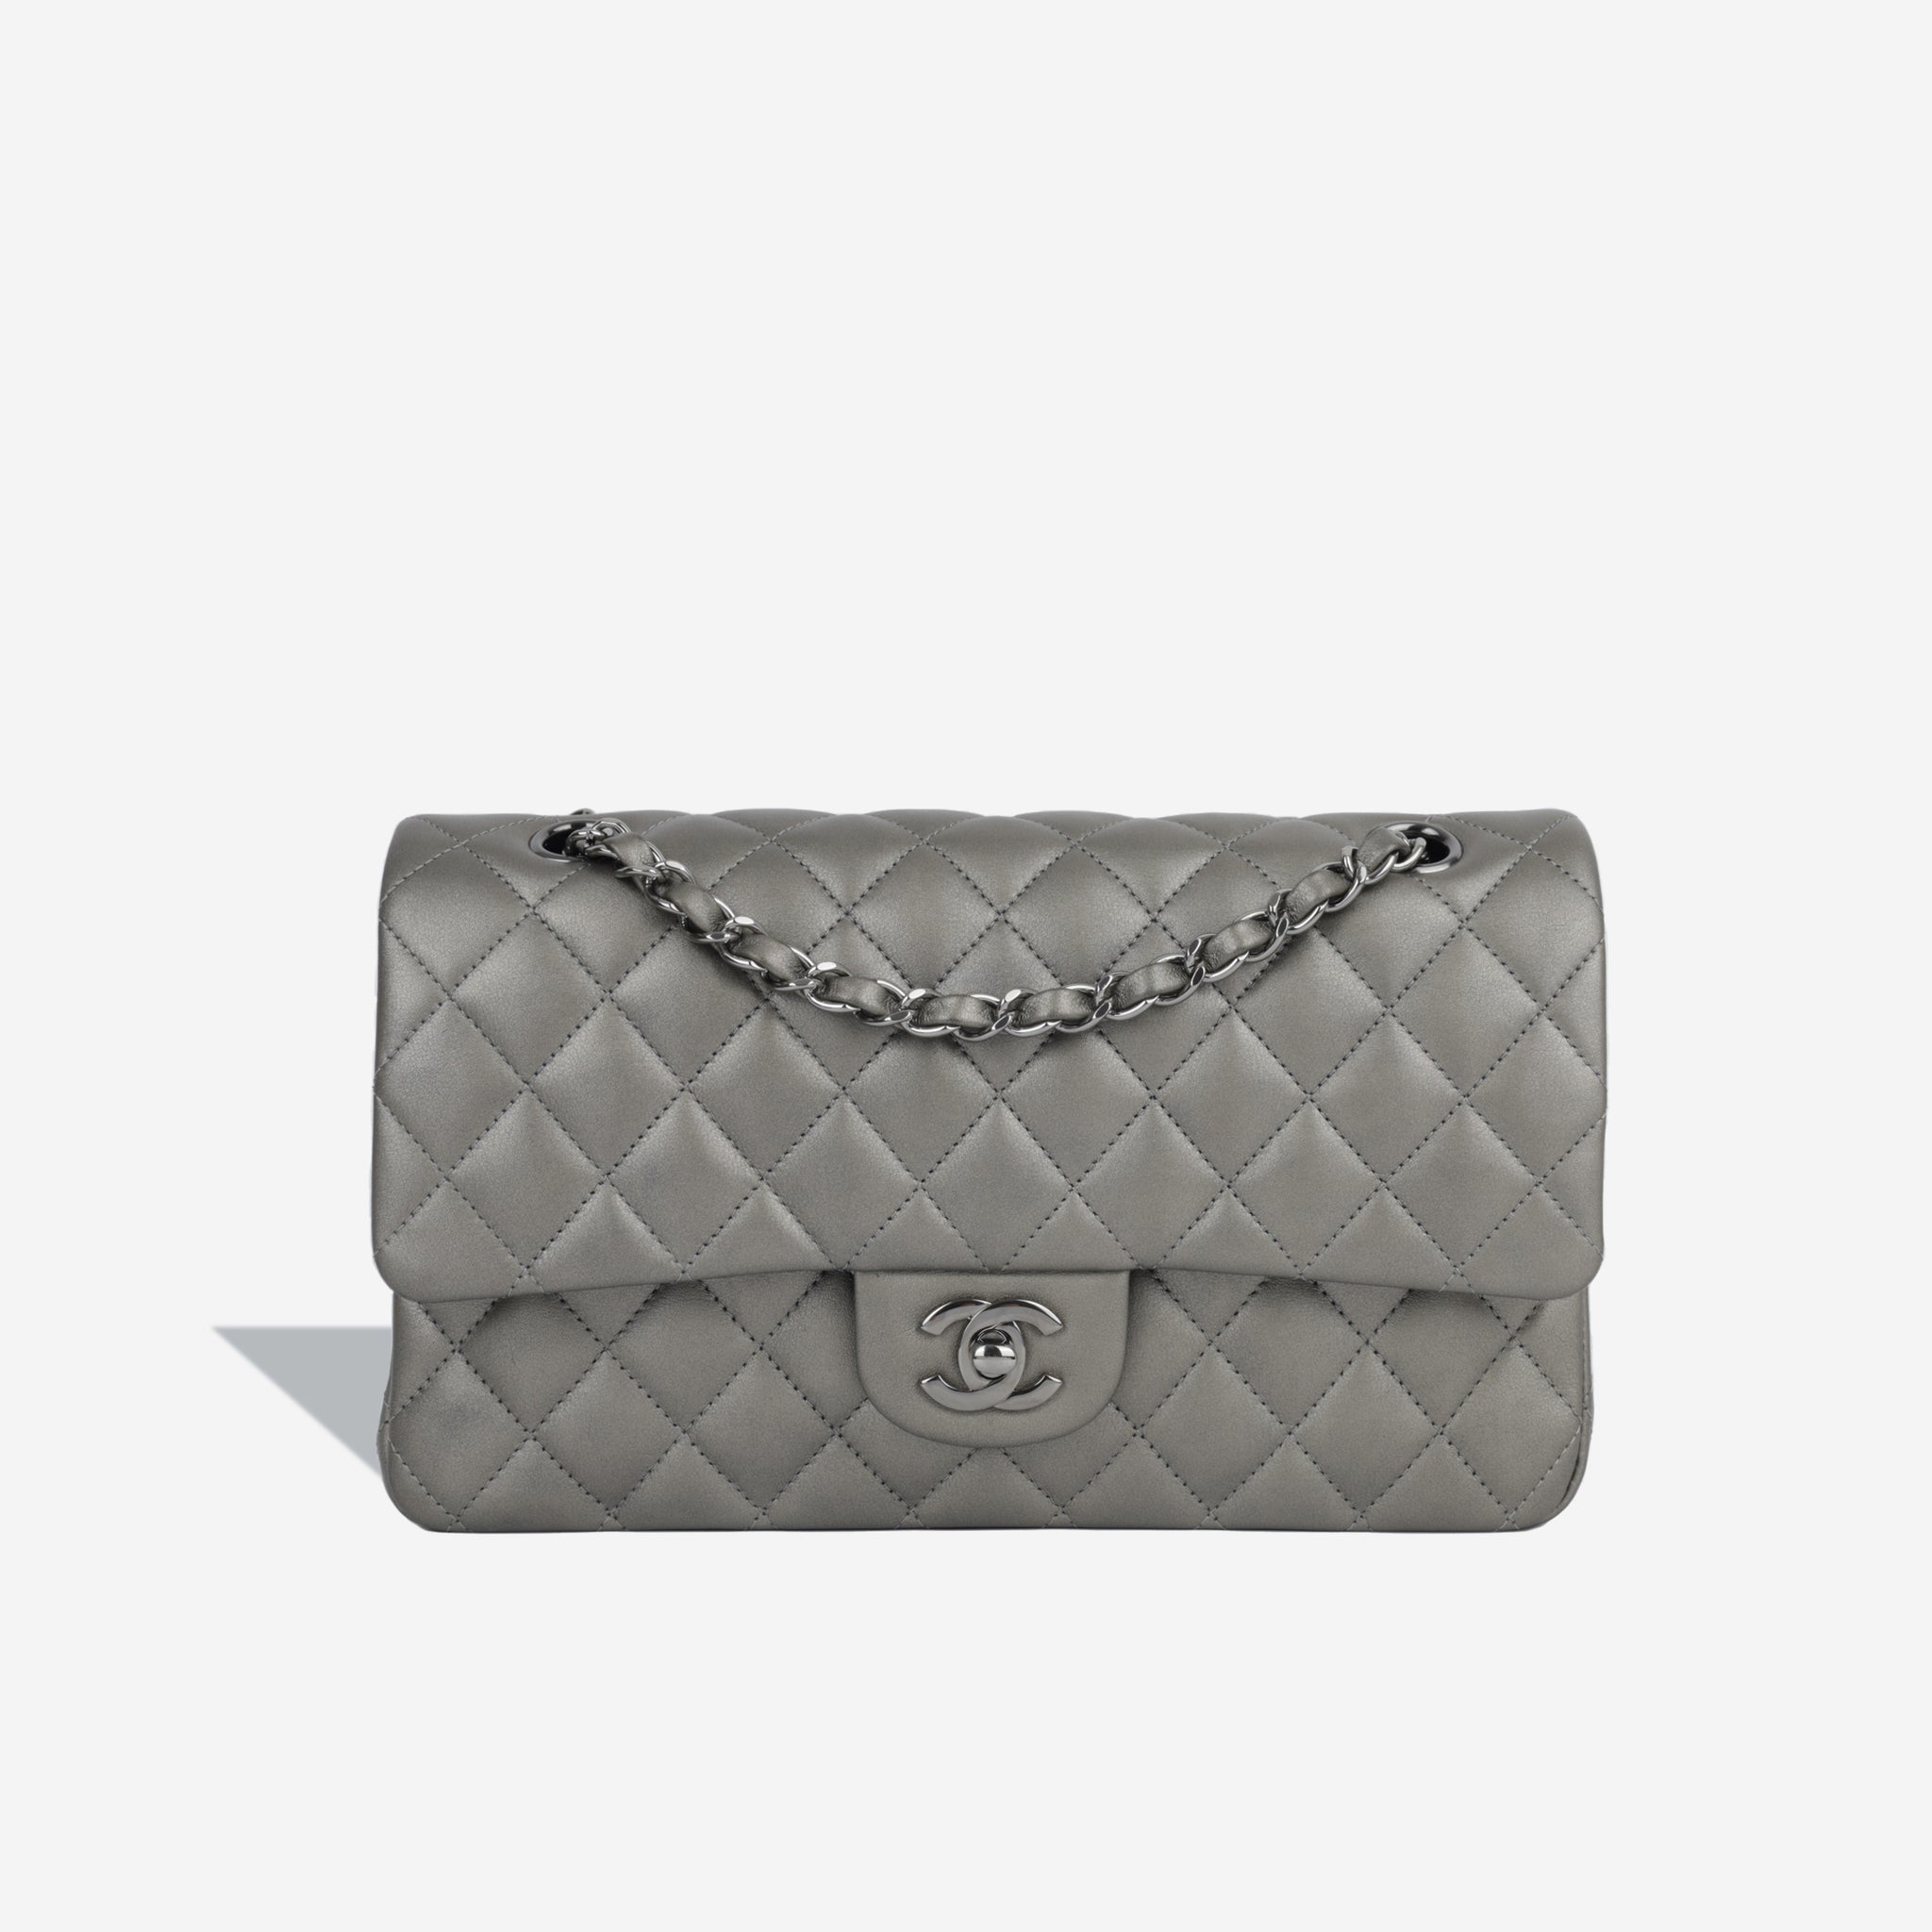 Chanel - Medium Classic Flap Bag - Graphite Metallic Lambskin - RHW - Pre  Loved